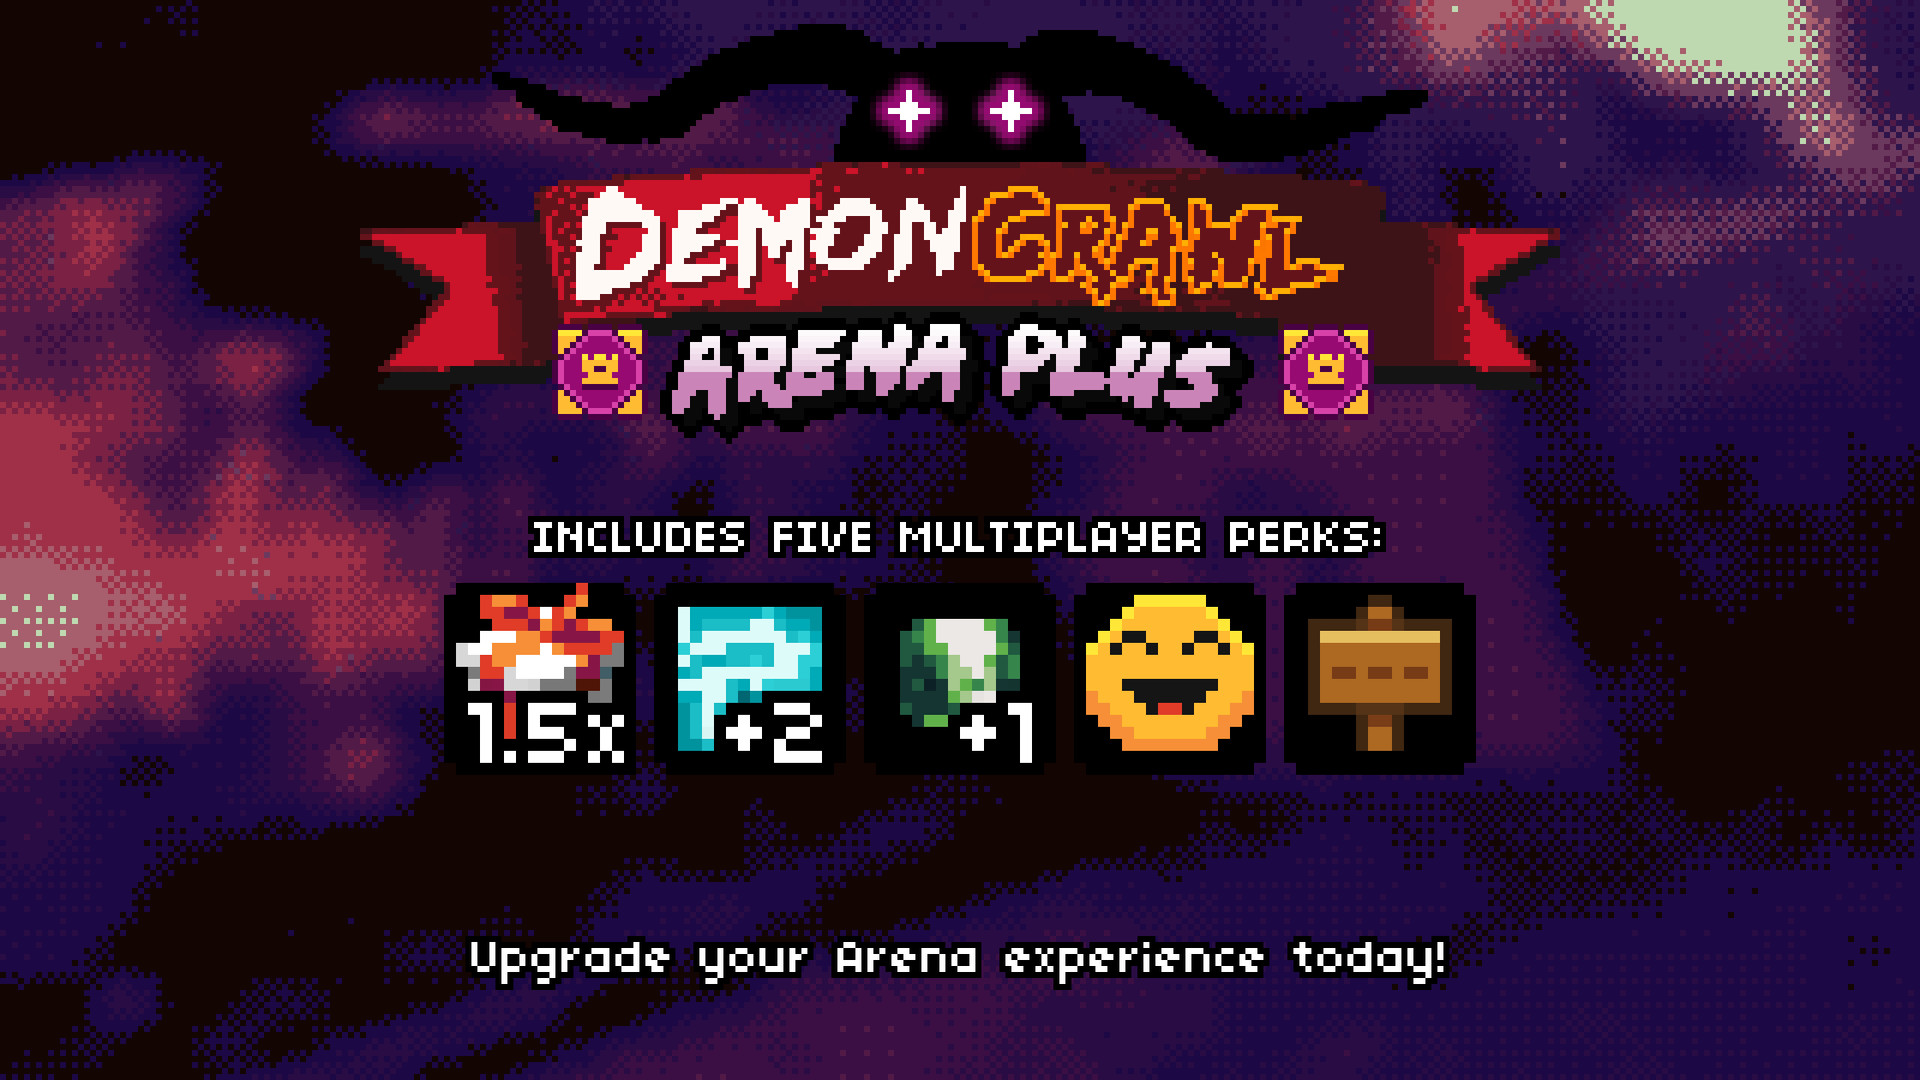 DemonCrawl - Arena Plus Featured Screenshot #1